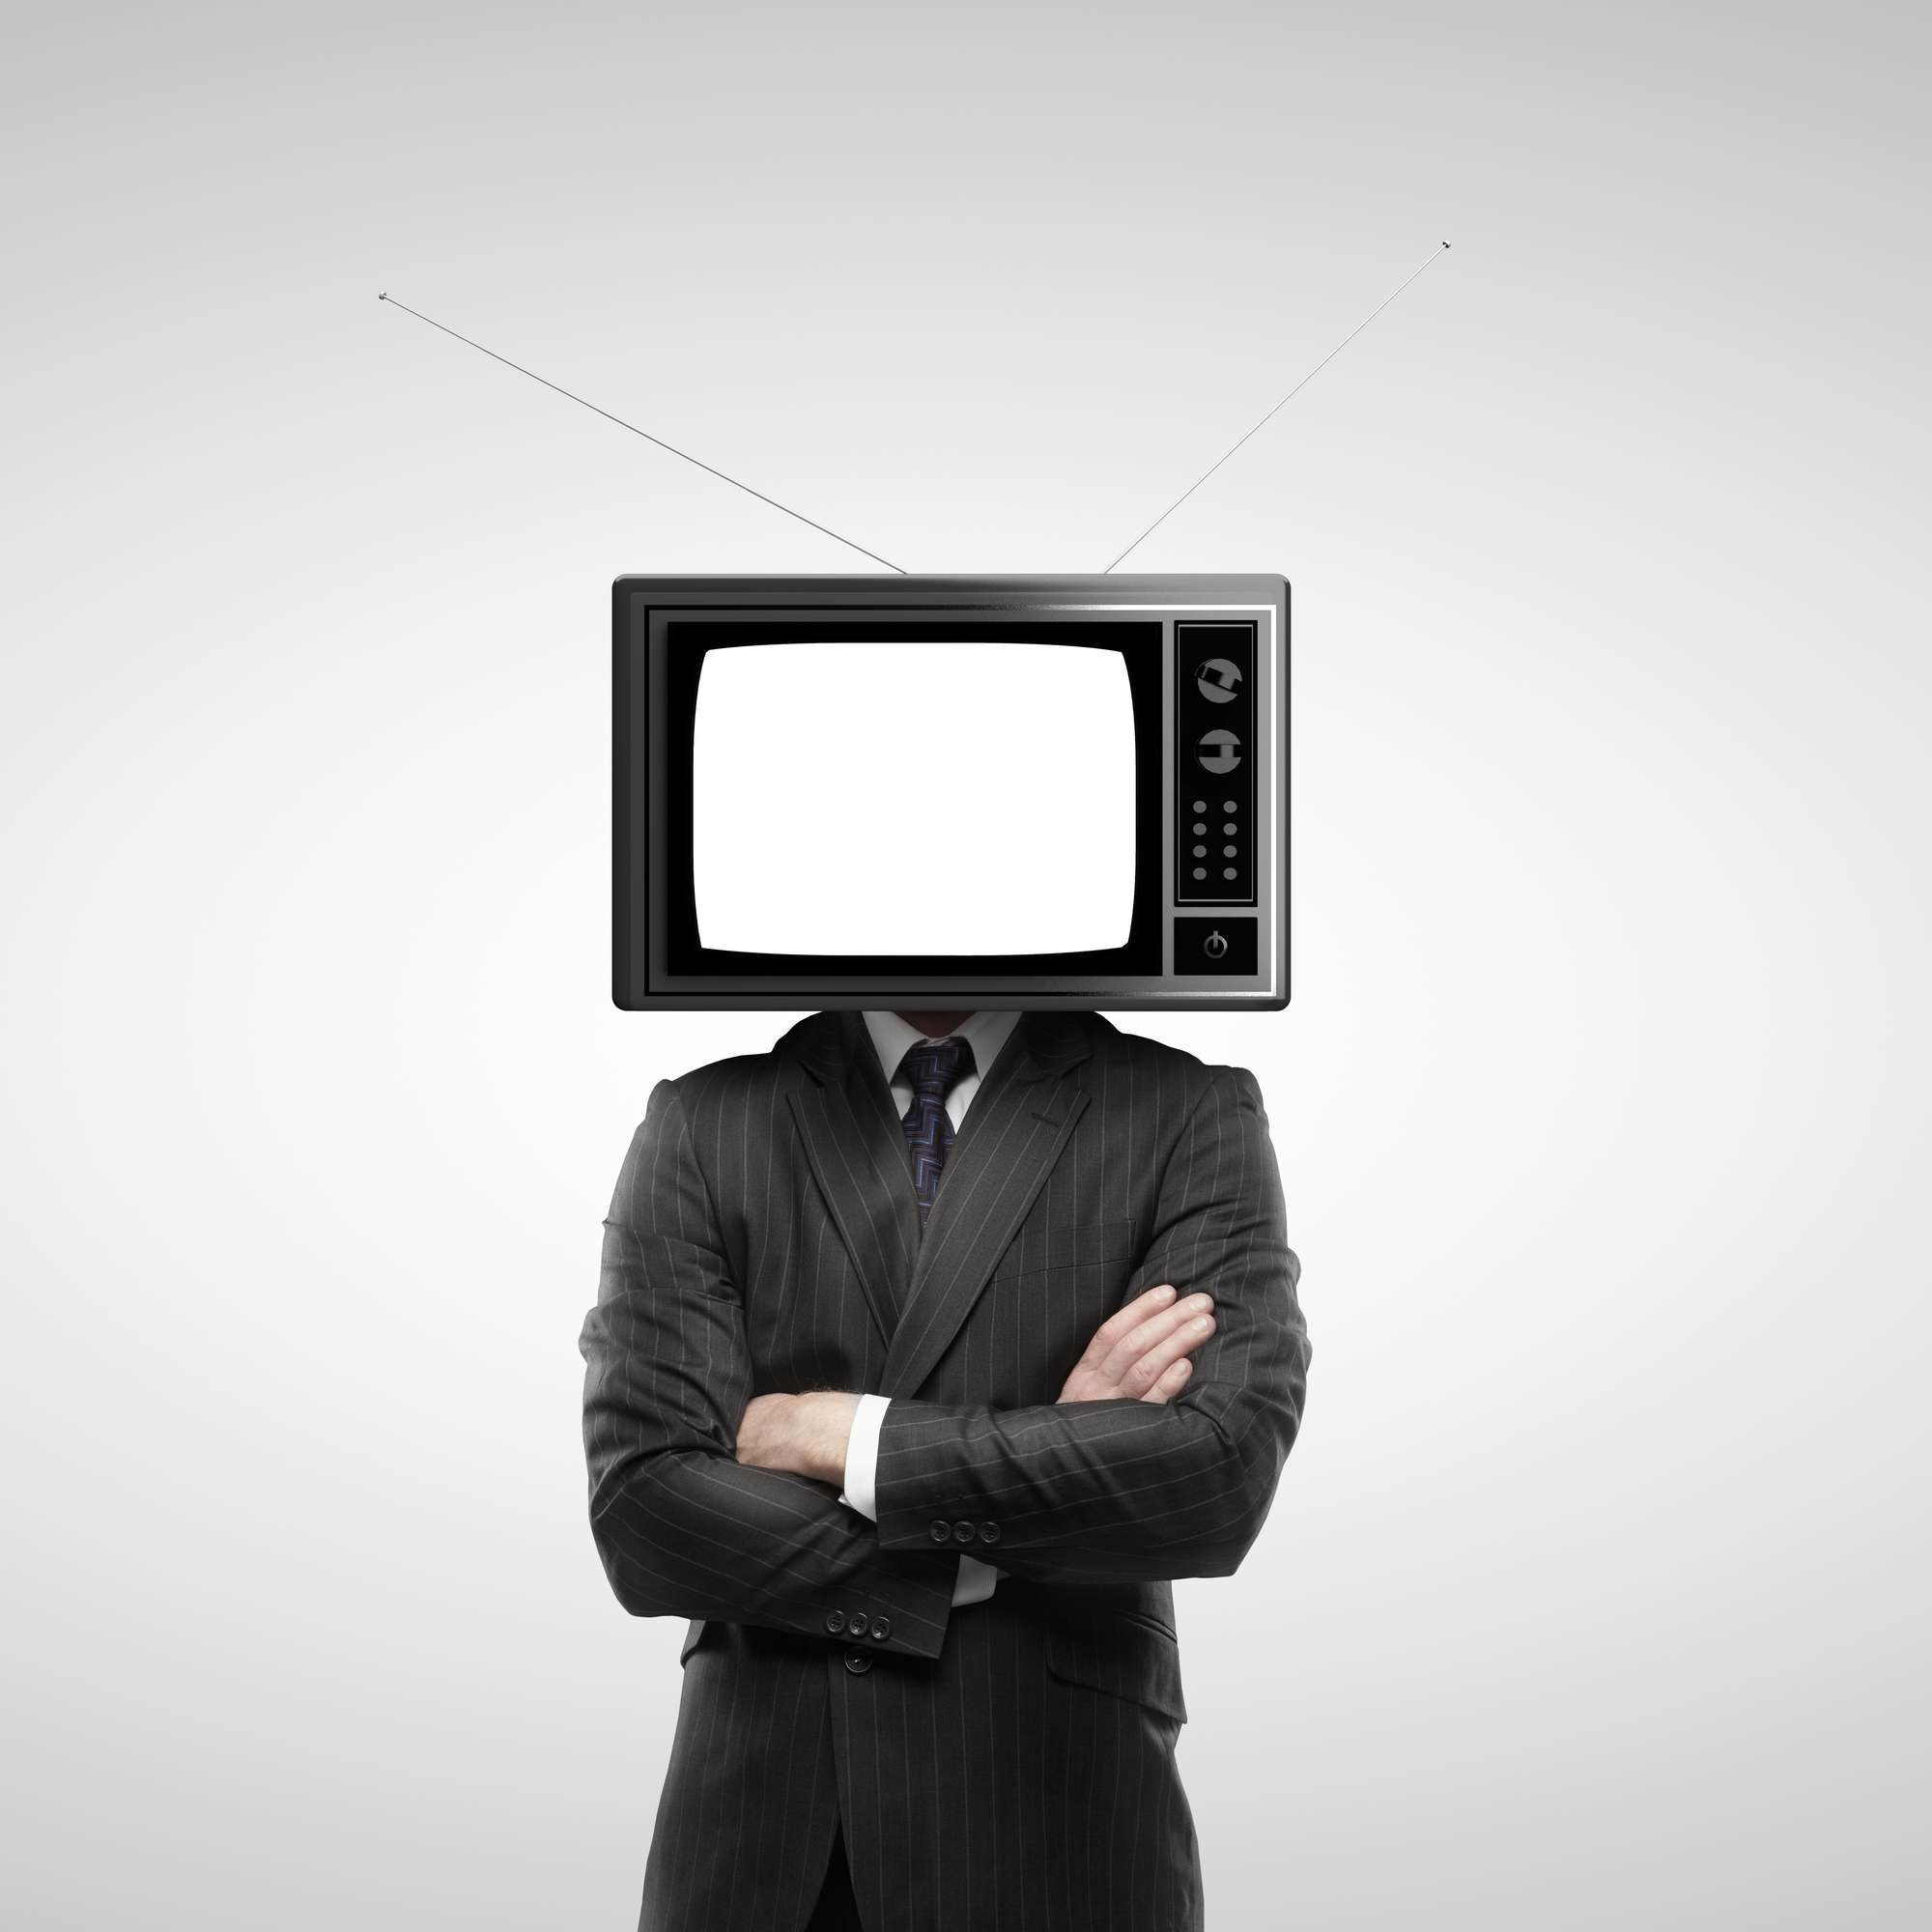 Mewing tv man. Телевизор вместо головы. Голова телевизор. Человек телевизор. Человек с телевизором вместо головы.